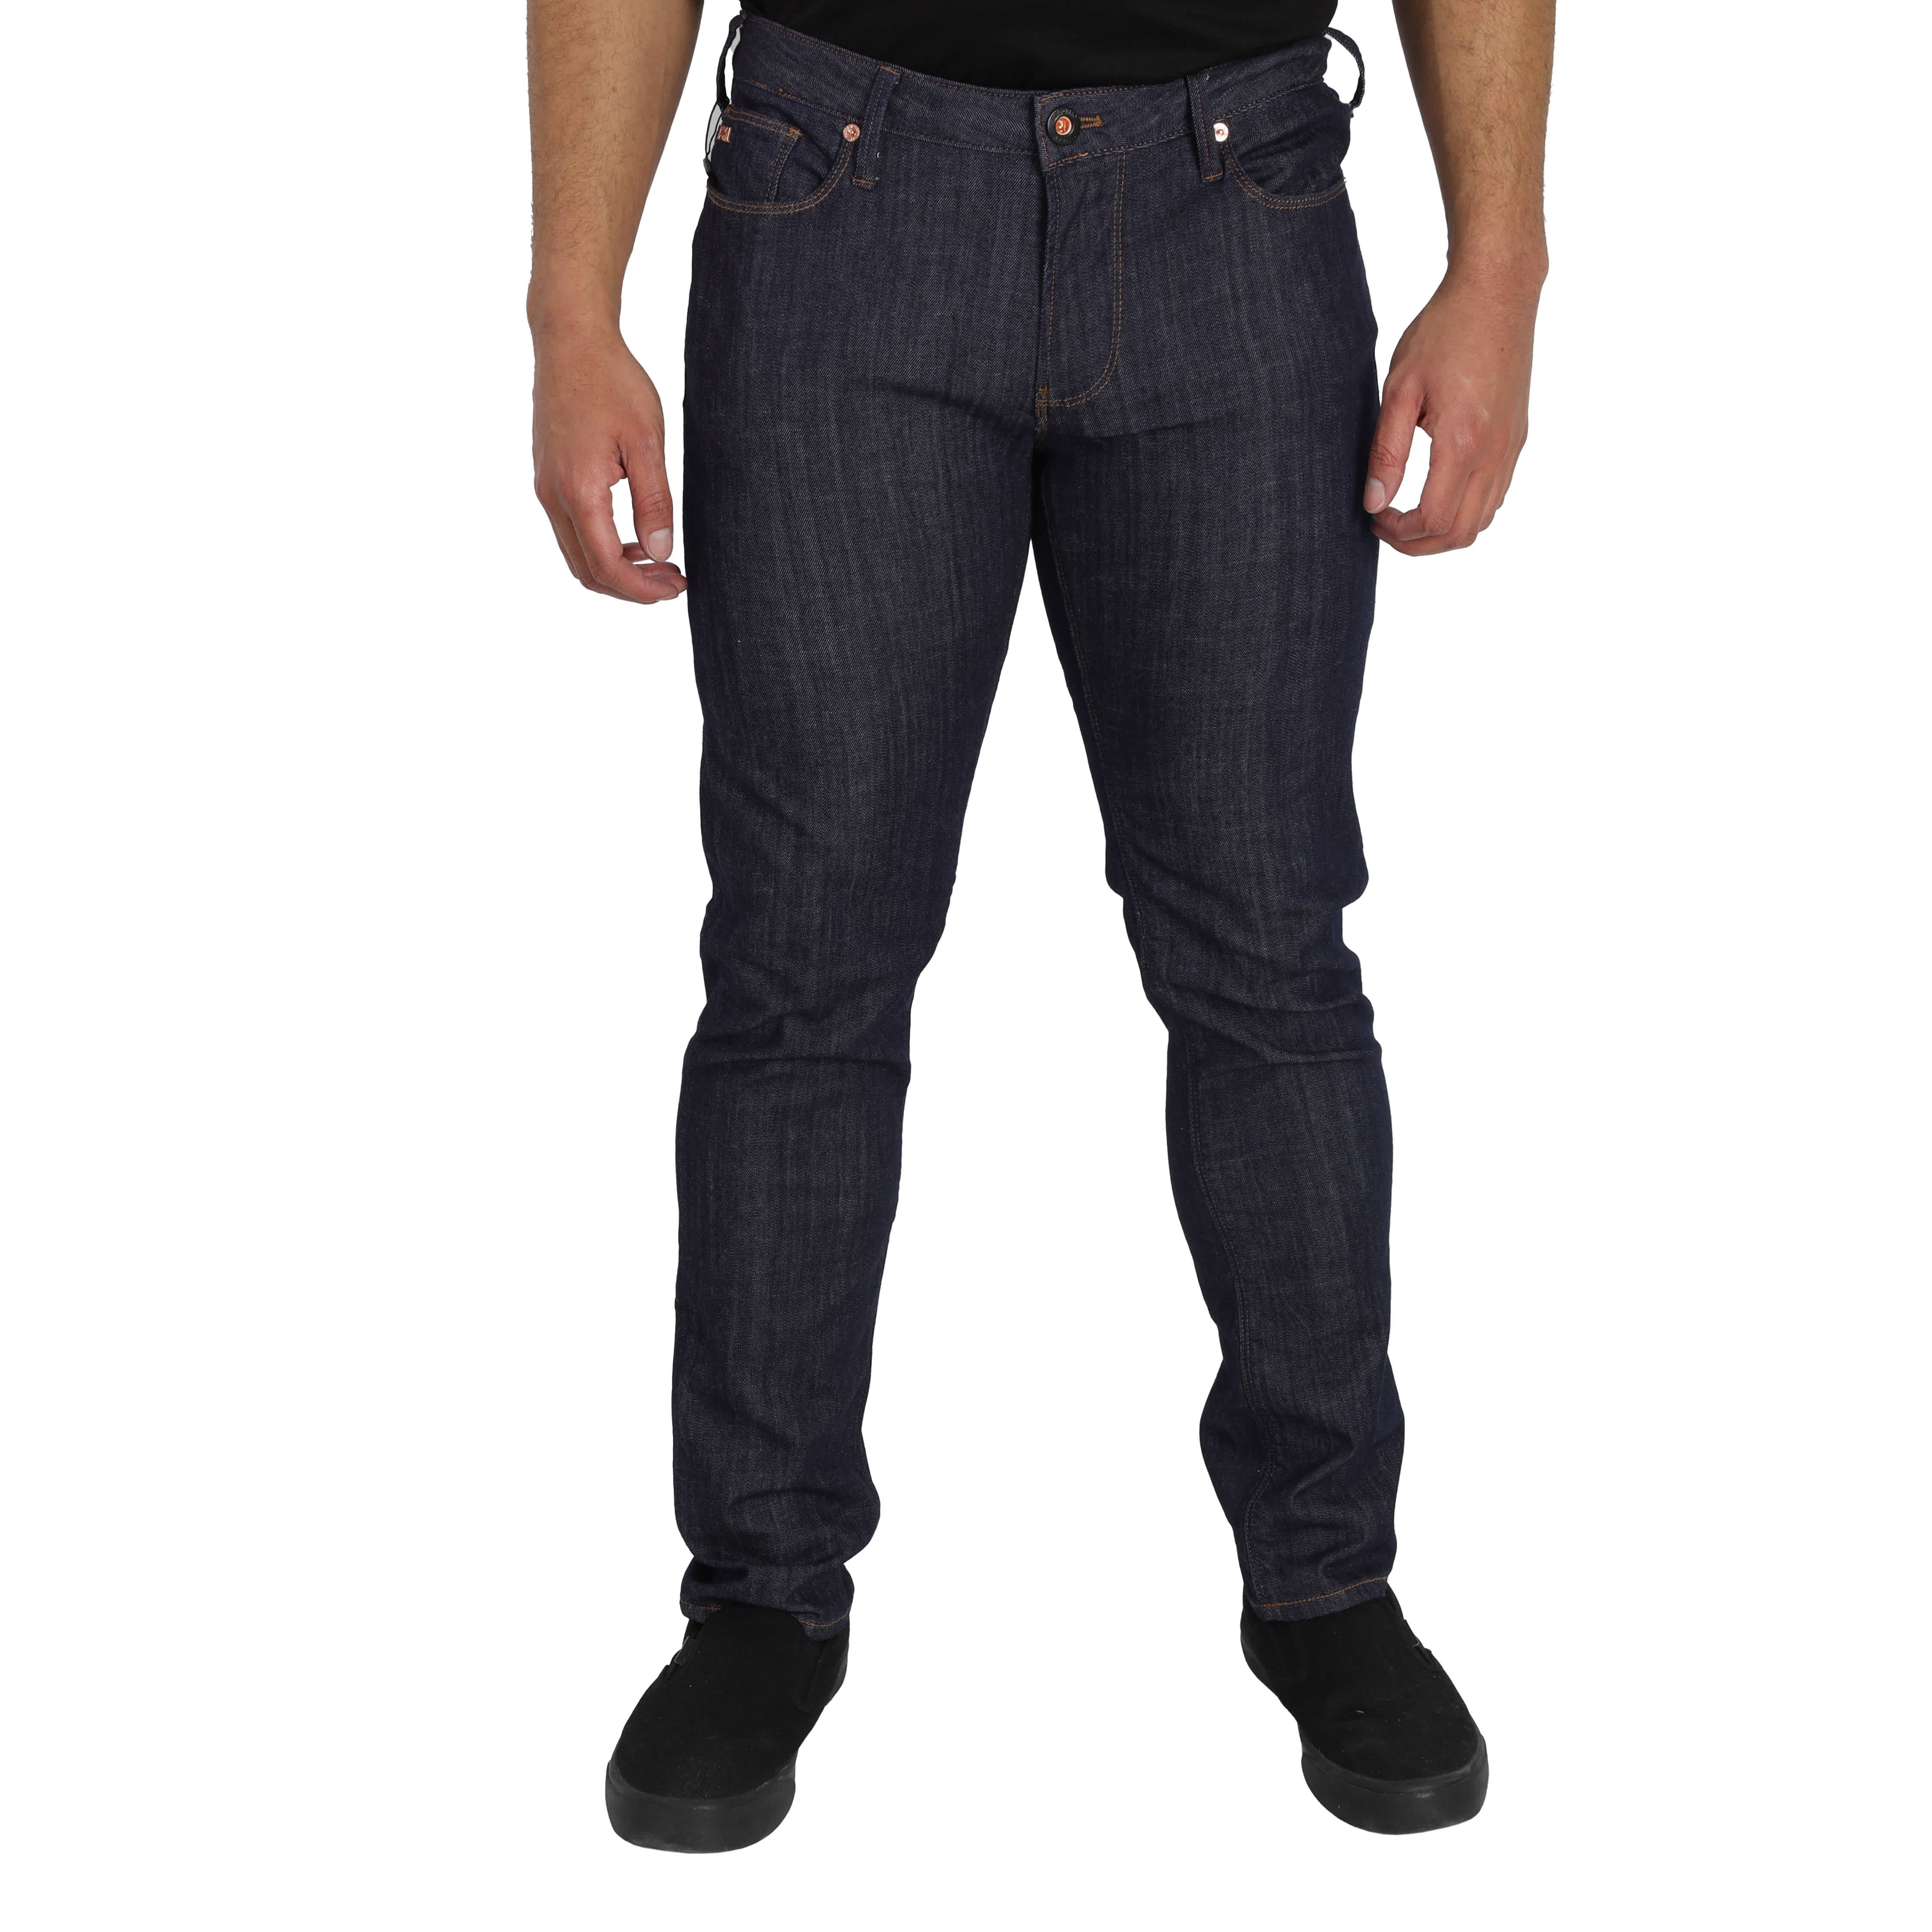 Armani Men's J06 Slim-Fit Jeans, Waist Size 38" -